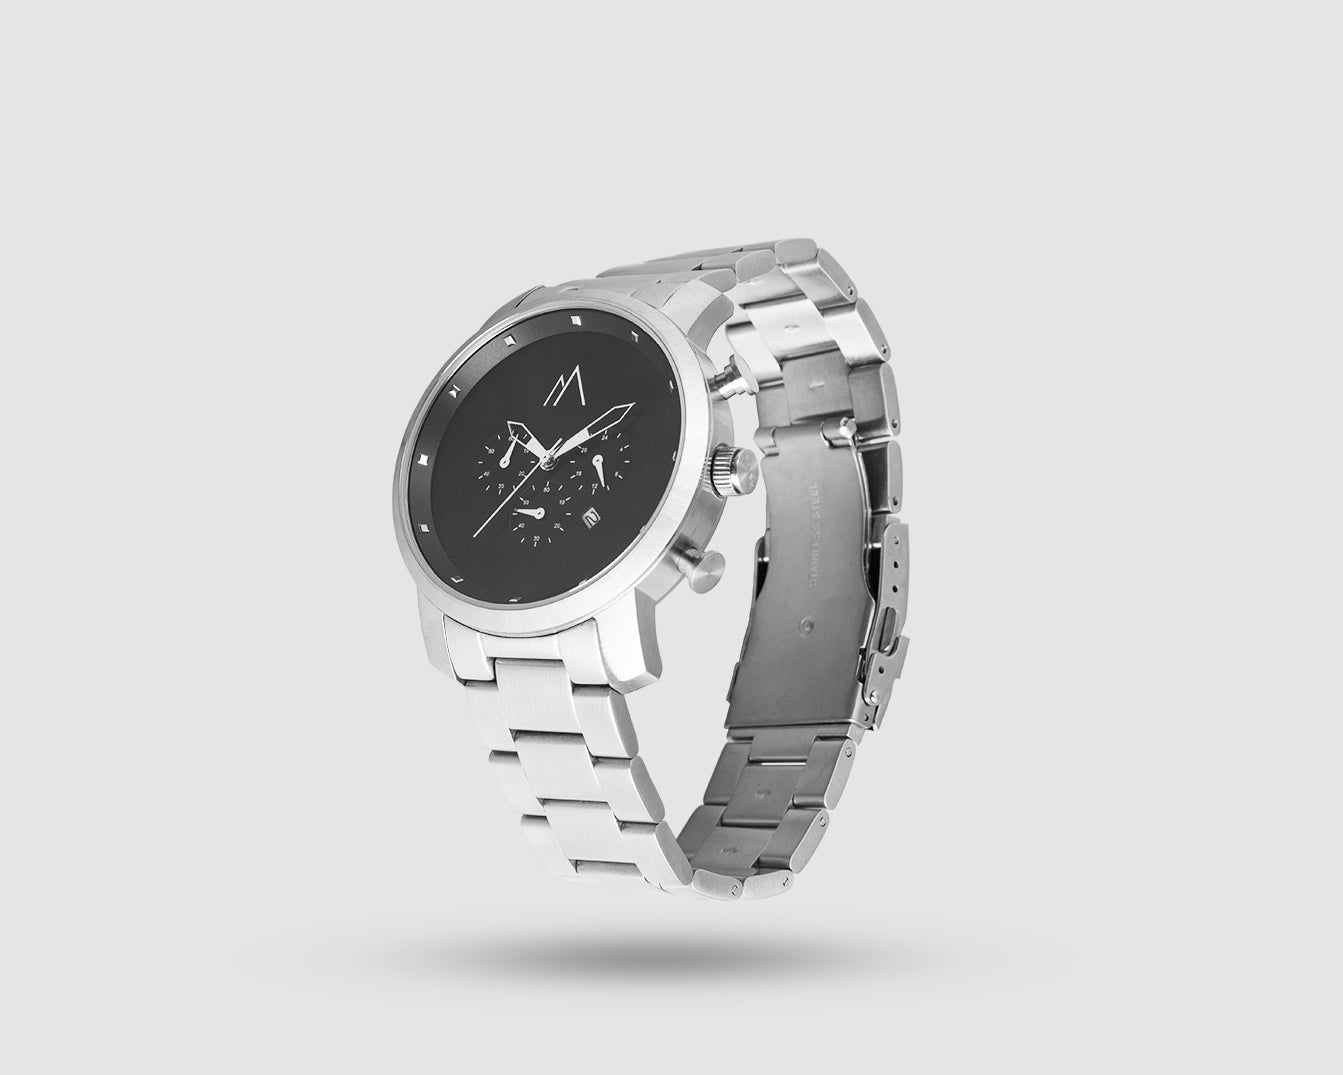 Quartz chronograph date watch metallic bands silver black